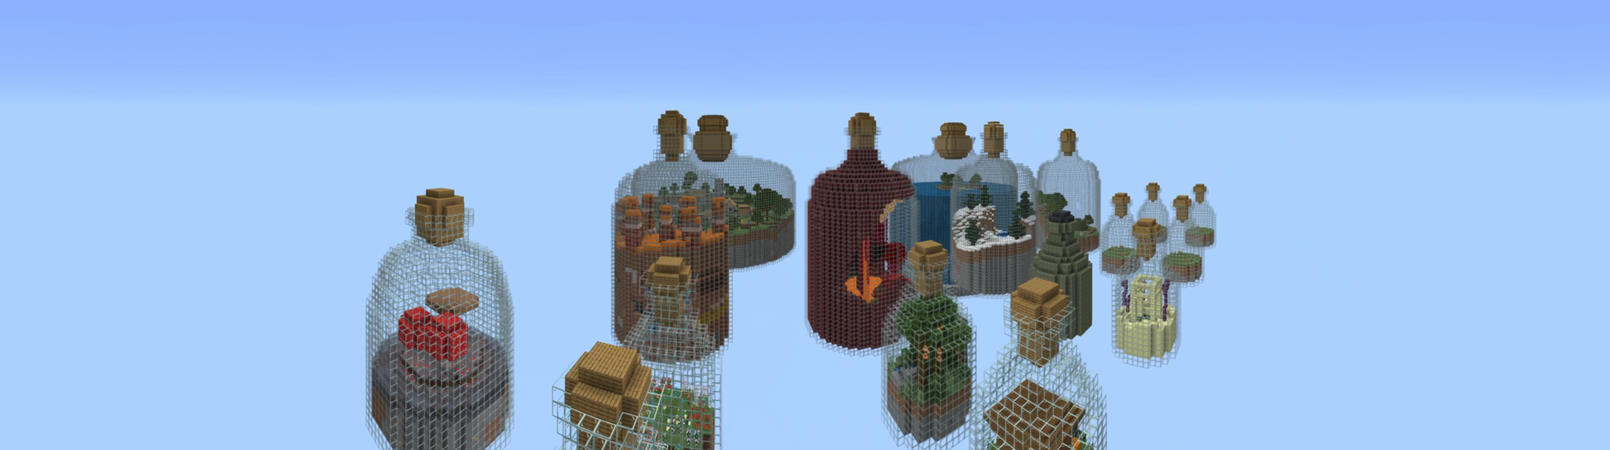 Advanced World in a Jar Panorama